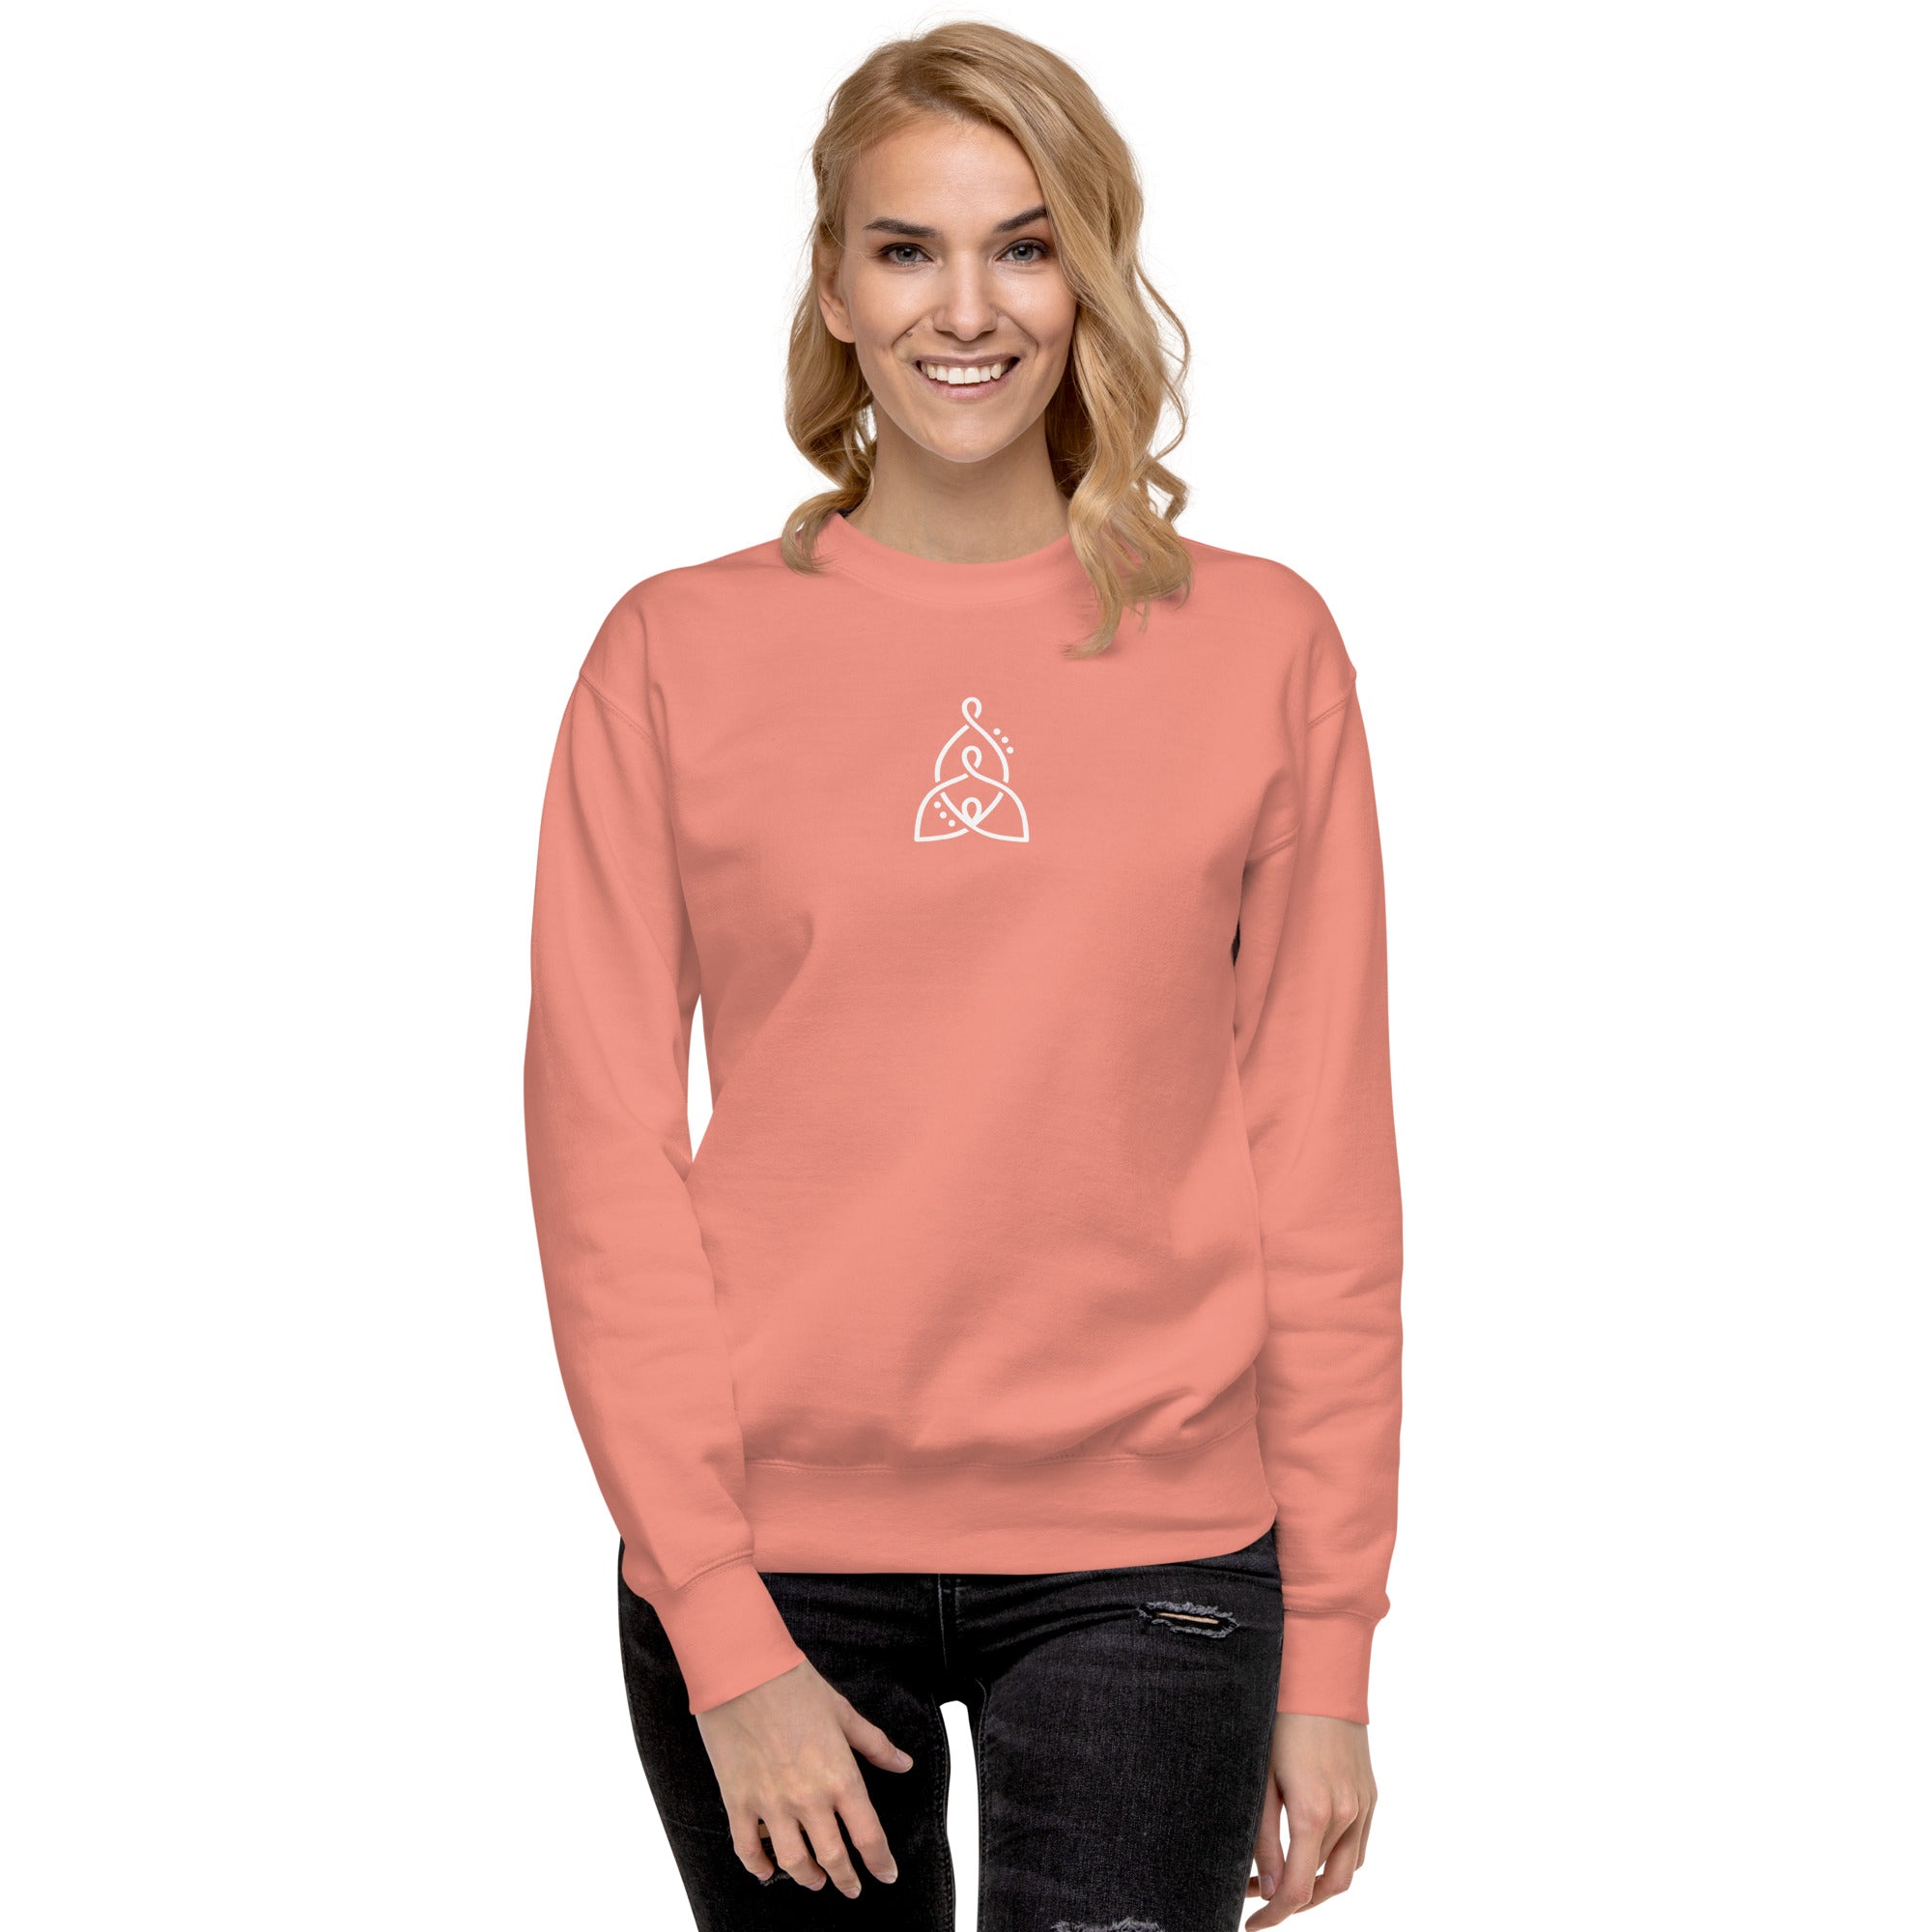 unisex-premium-sweatshirt-dusty-rose-front-2-663d0a3841611.jpg